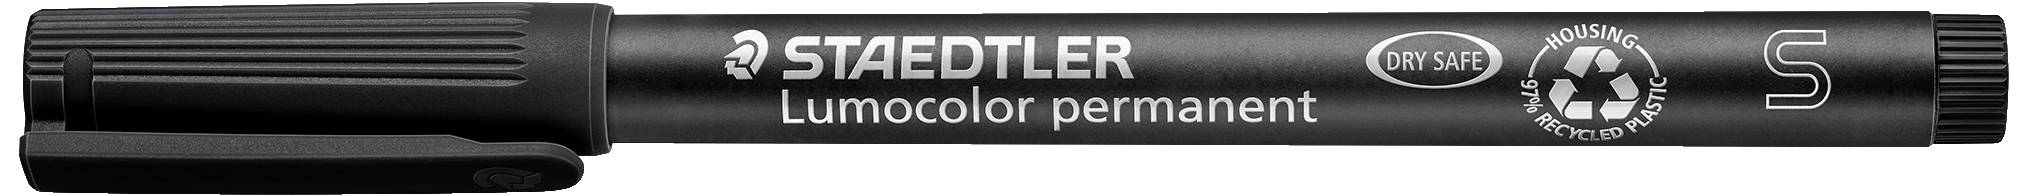 STAEDTLER Projektionsschreiber Lumocolor 313 perm